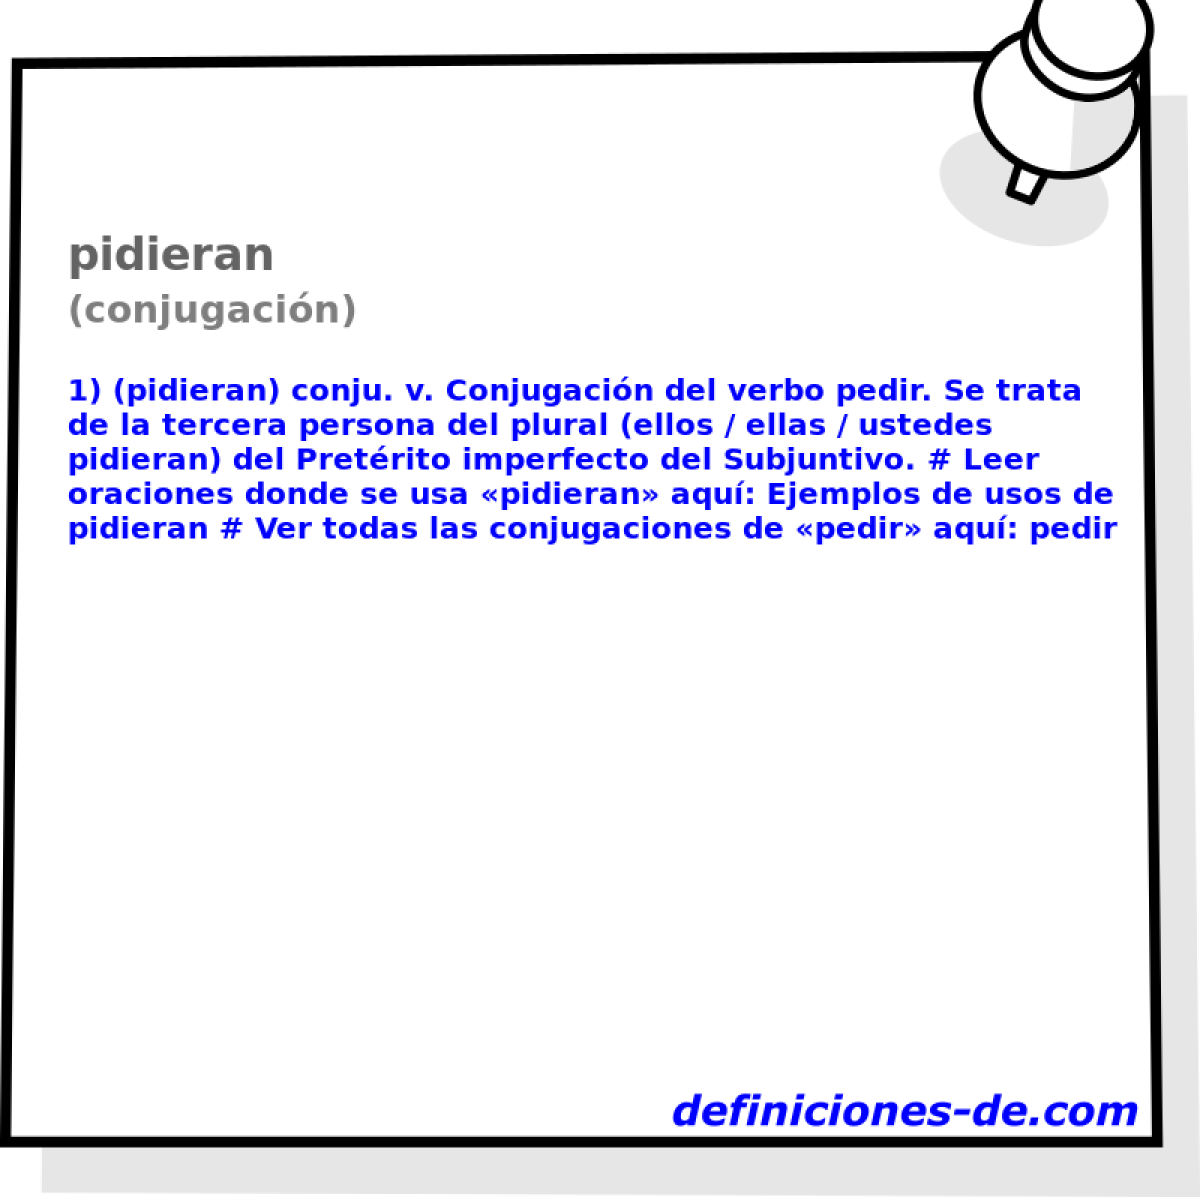 pidieran (conjugacin)